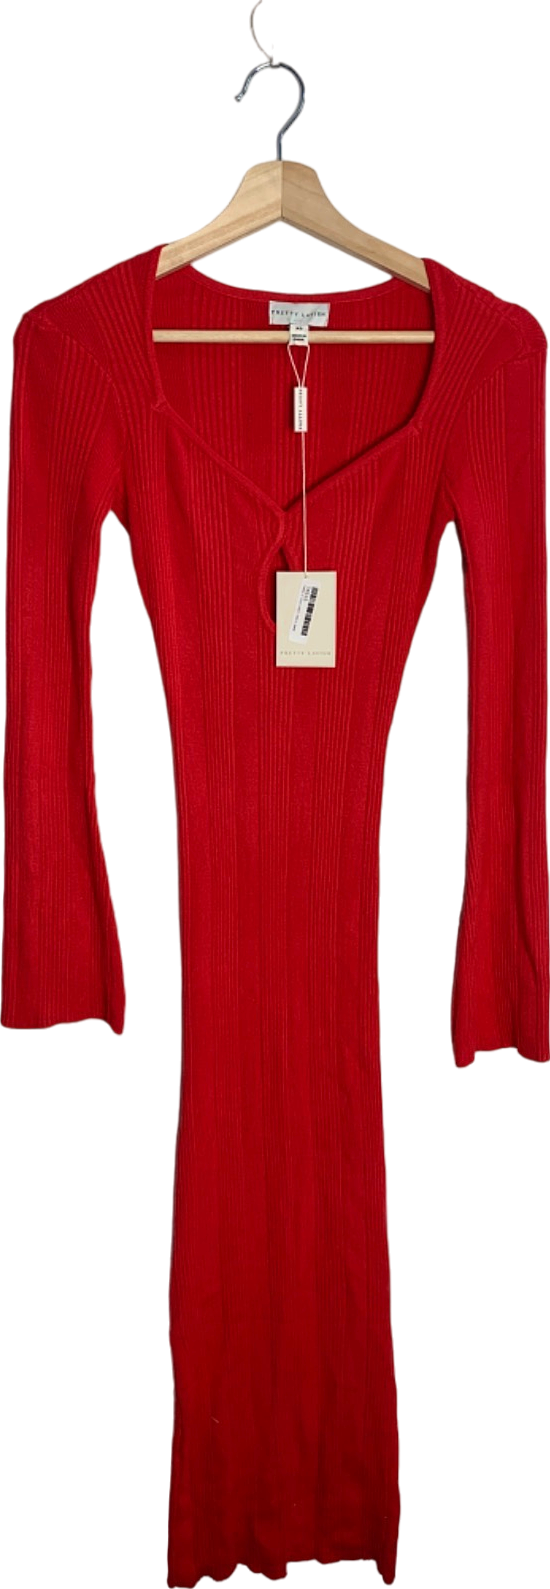 Pretty Lavish Scarlet Red Lana Sweetheart Neck Knit Dress XS